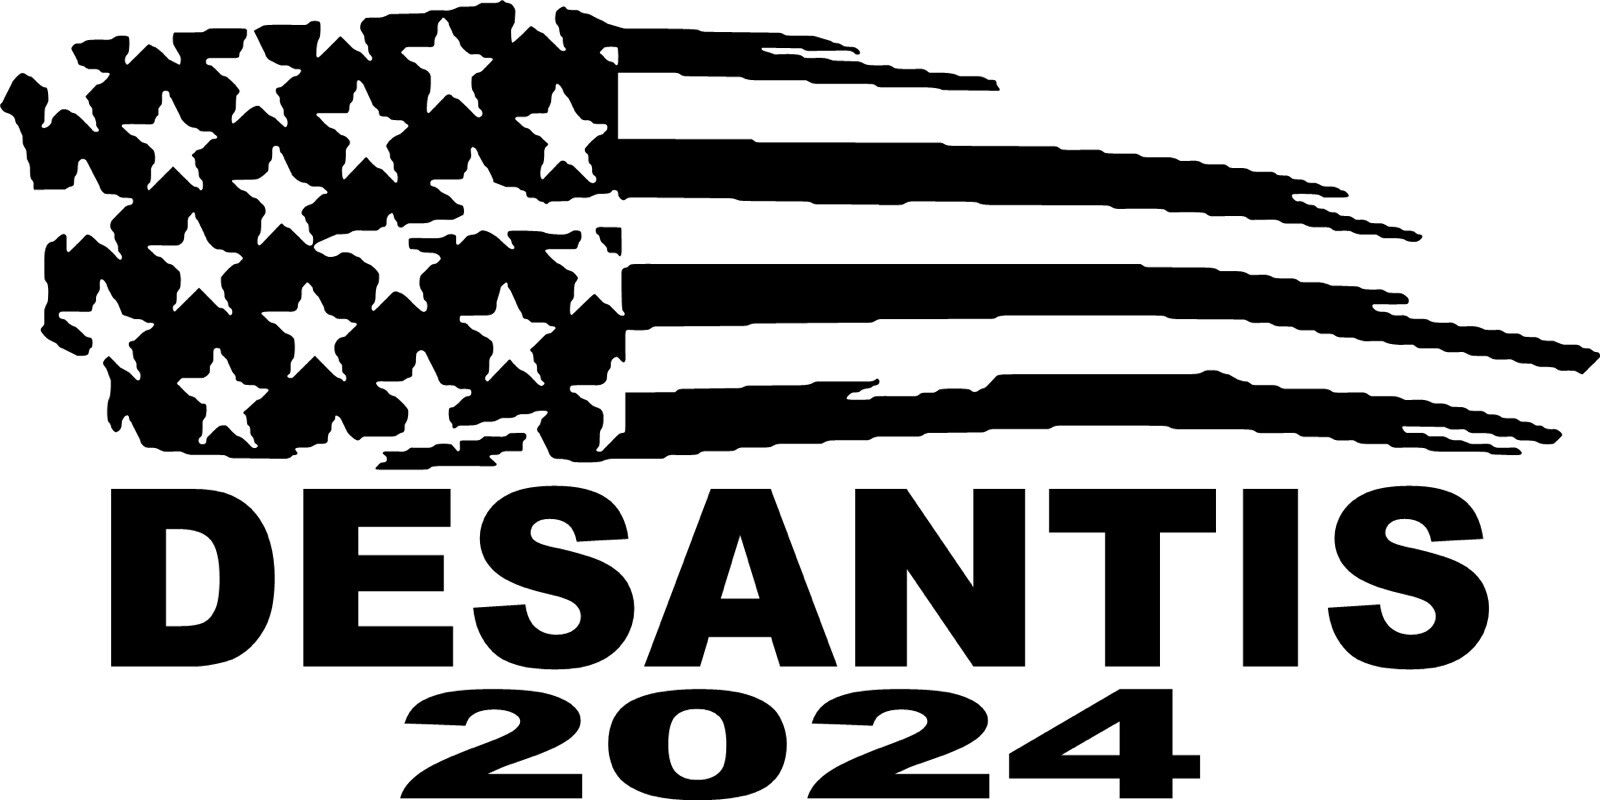 Black President Ron Desantis  Flag 2024 Vinyl Decal Sticker Car Truck USA Maga